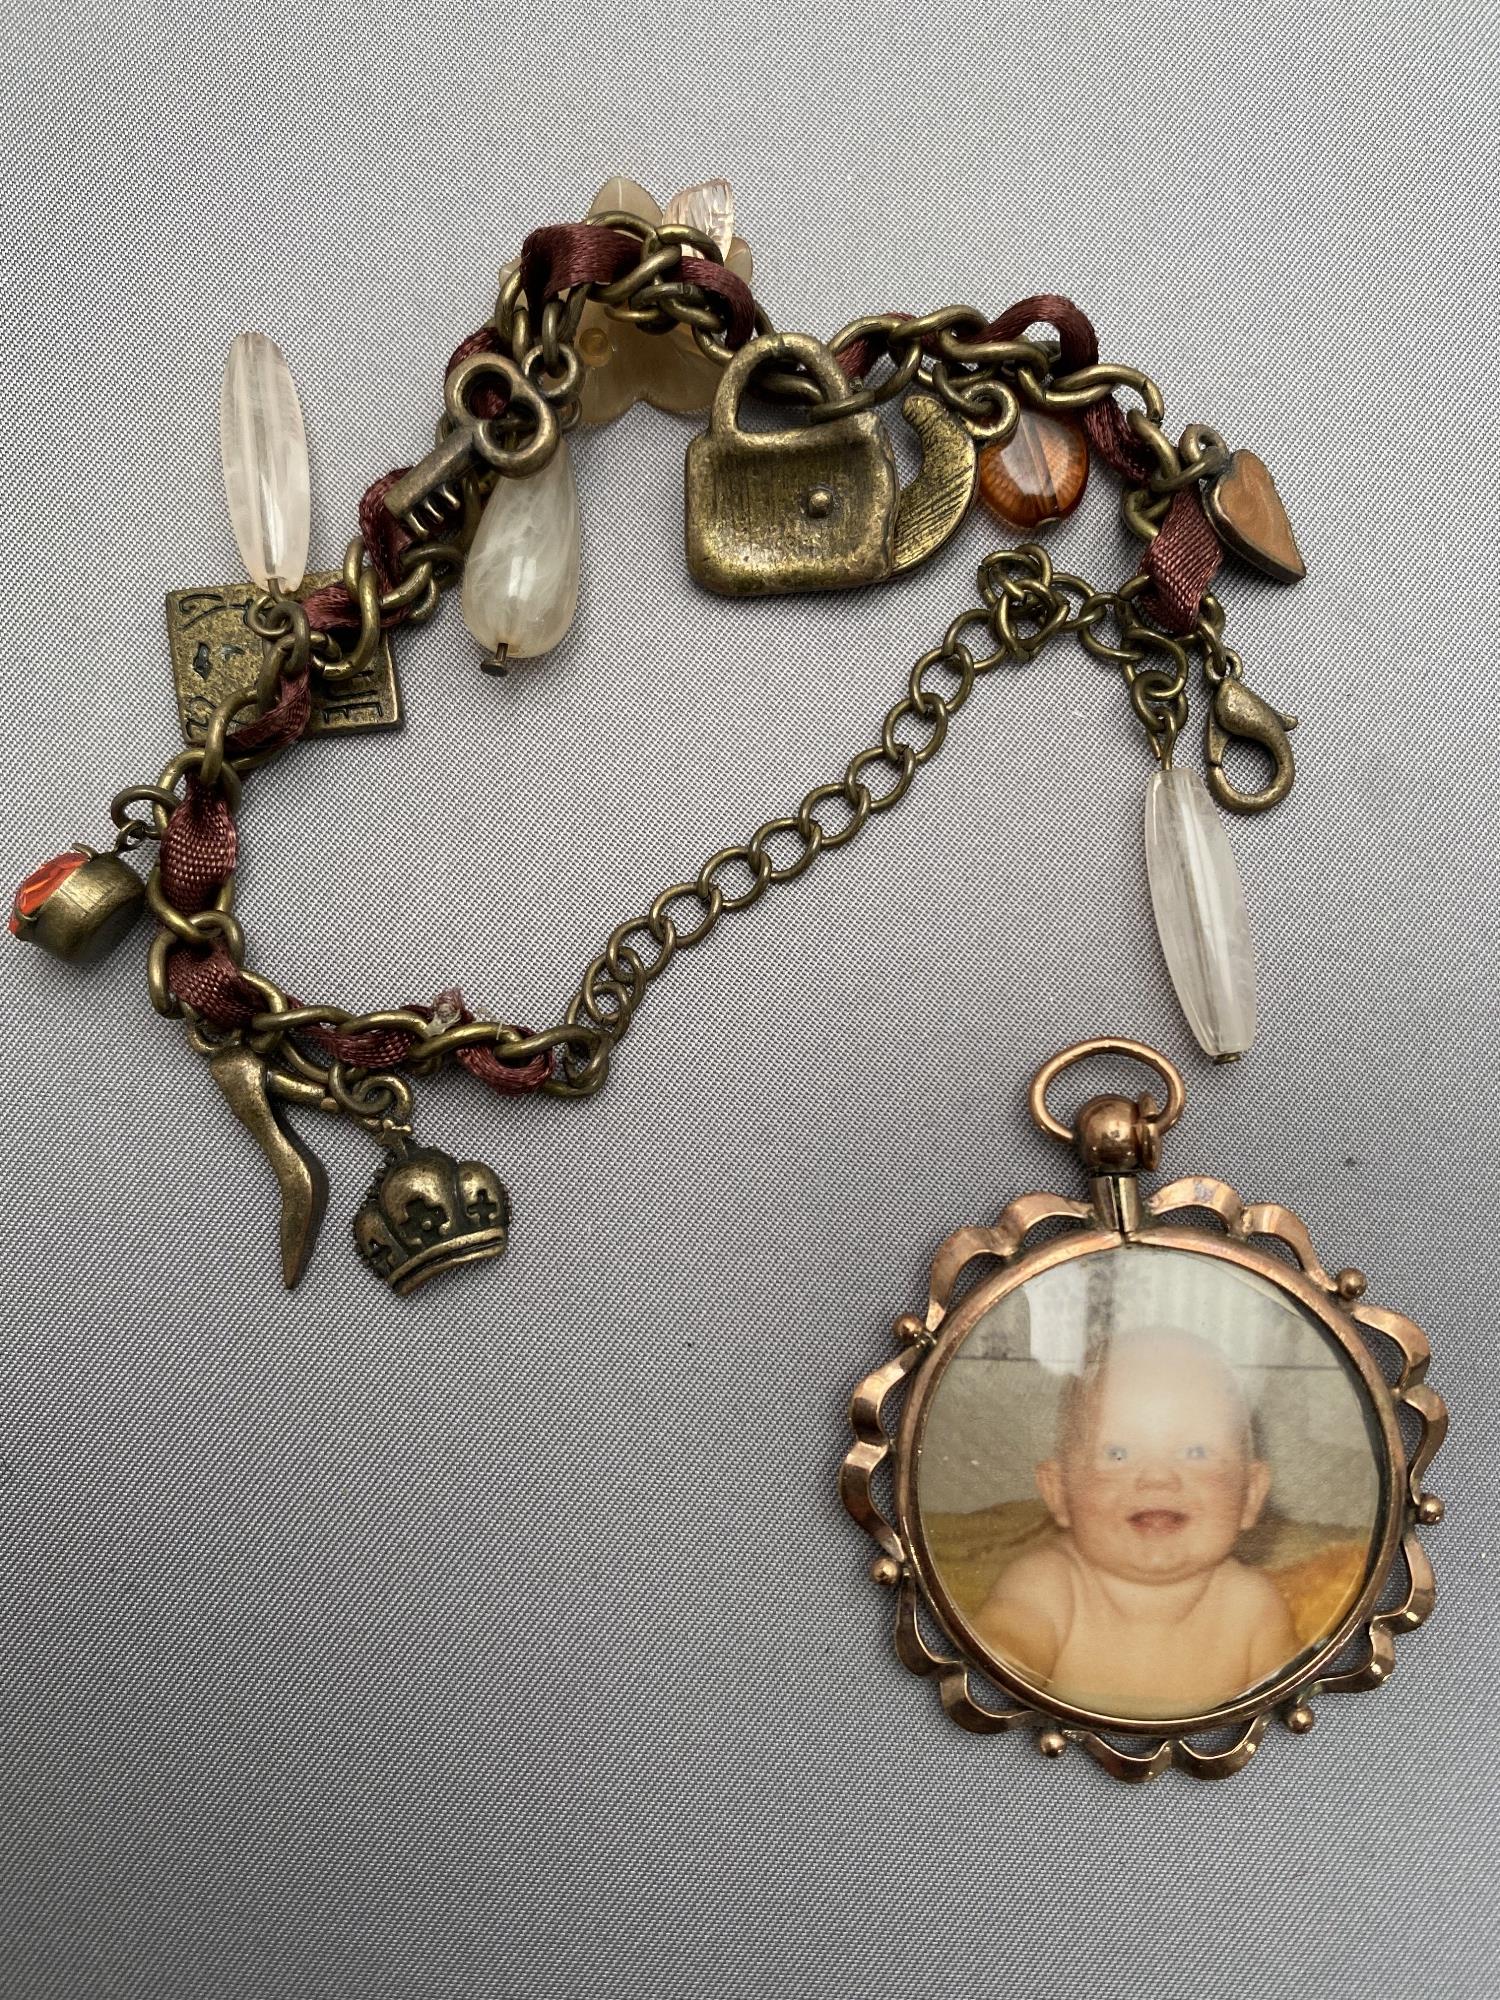 A costume charm bracelet together with a vintage pendant frame